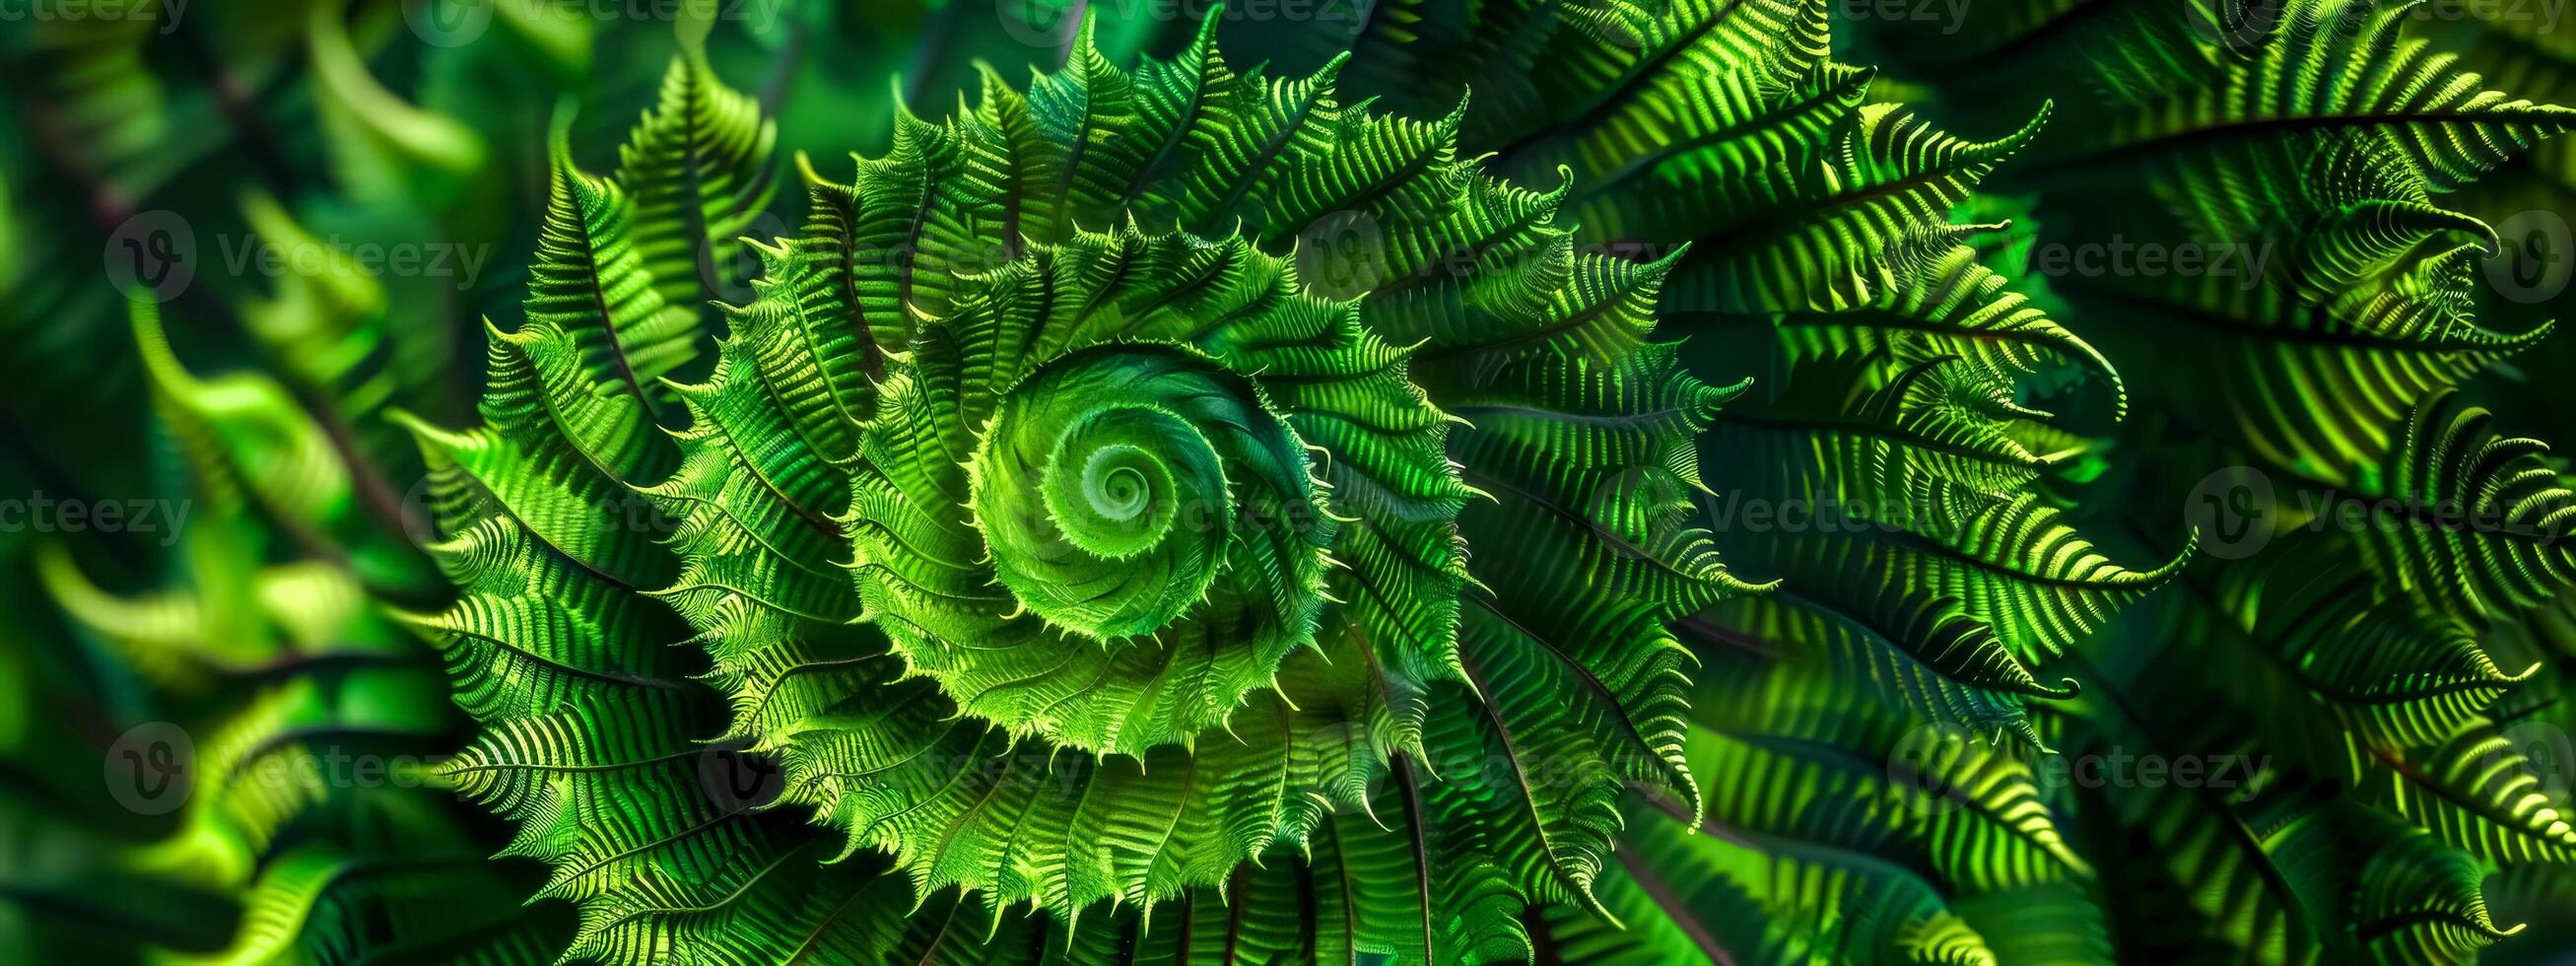 AI Generated Lush green fern spiral close-up photo